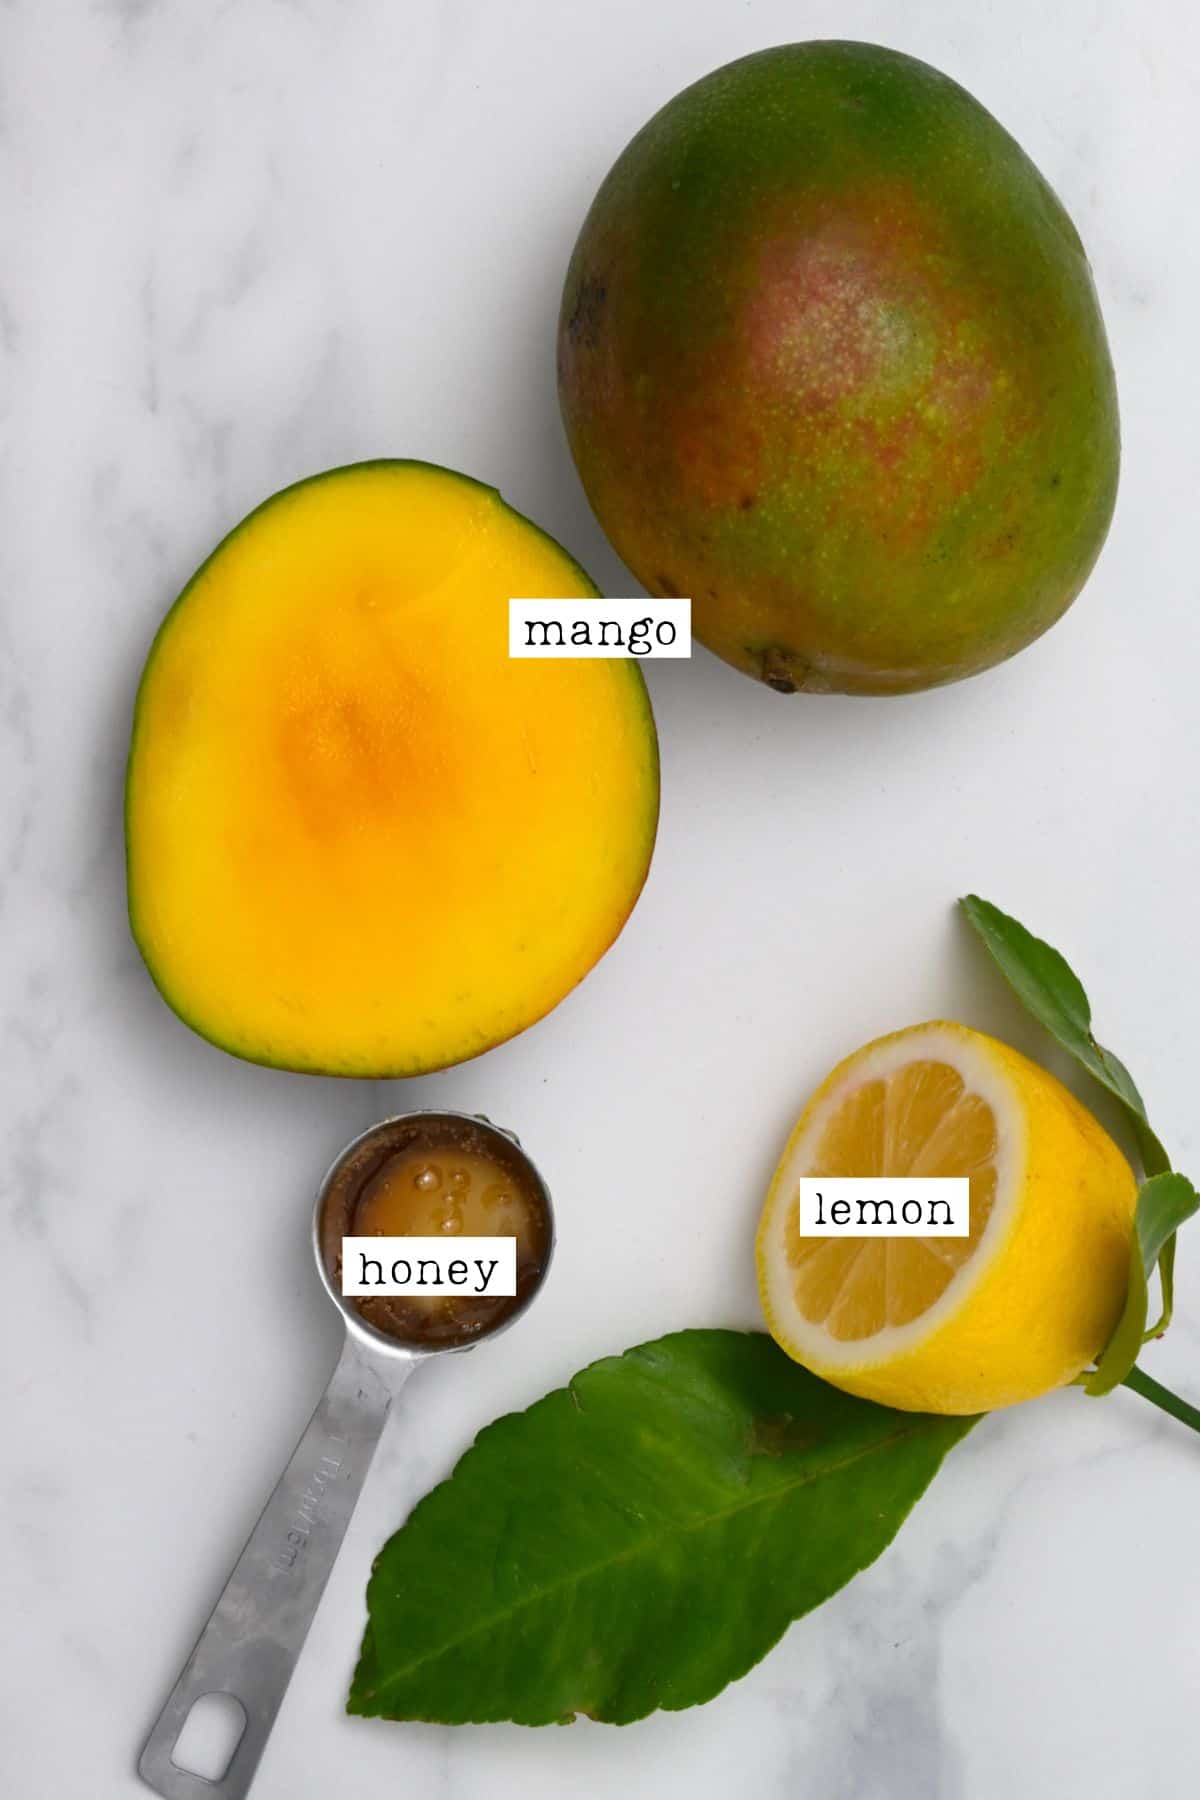 Ingredients for mango fruit roll ups